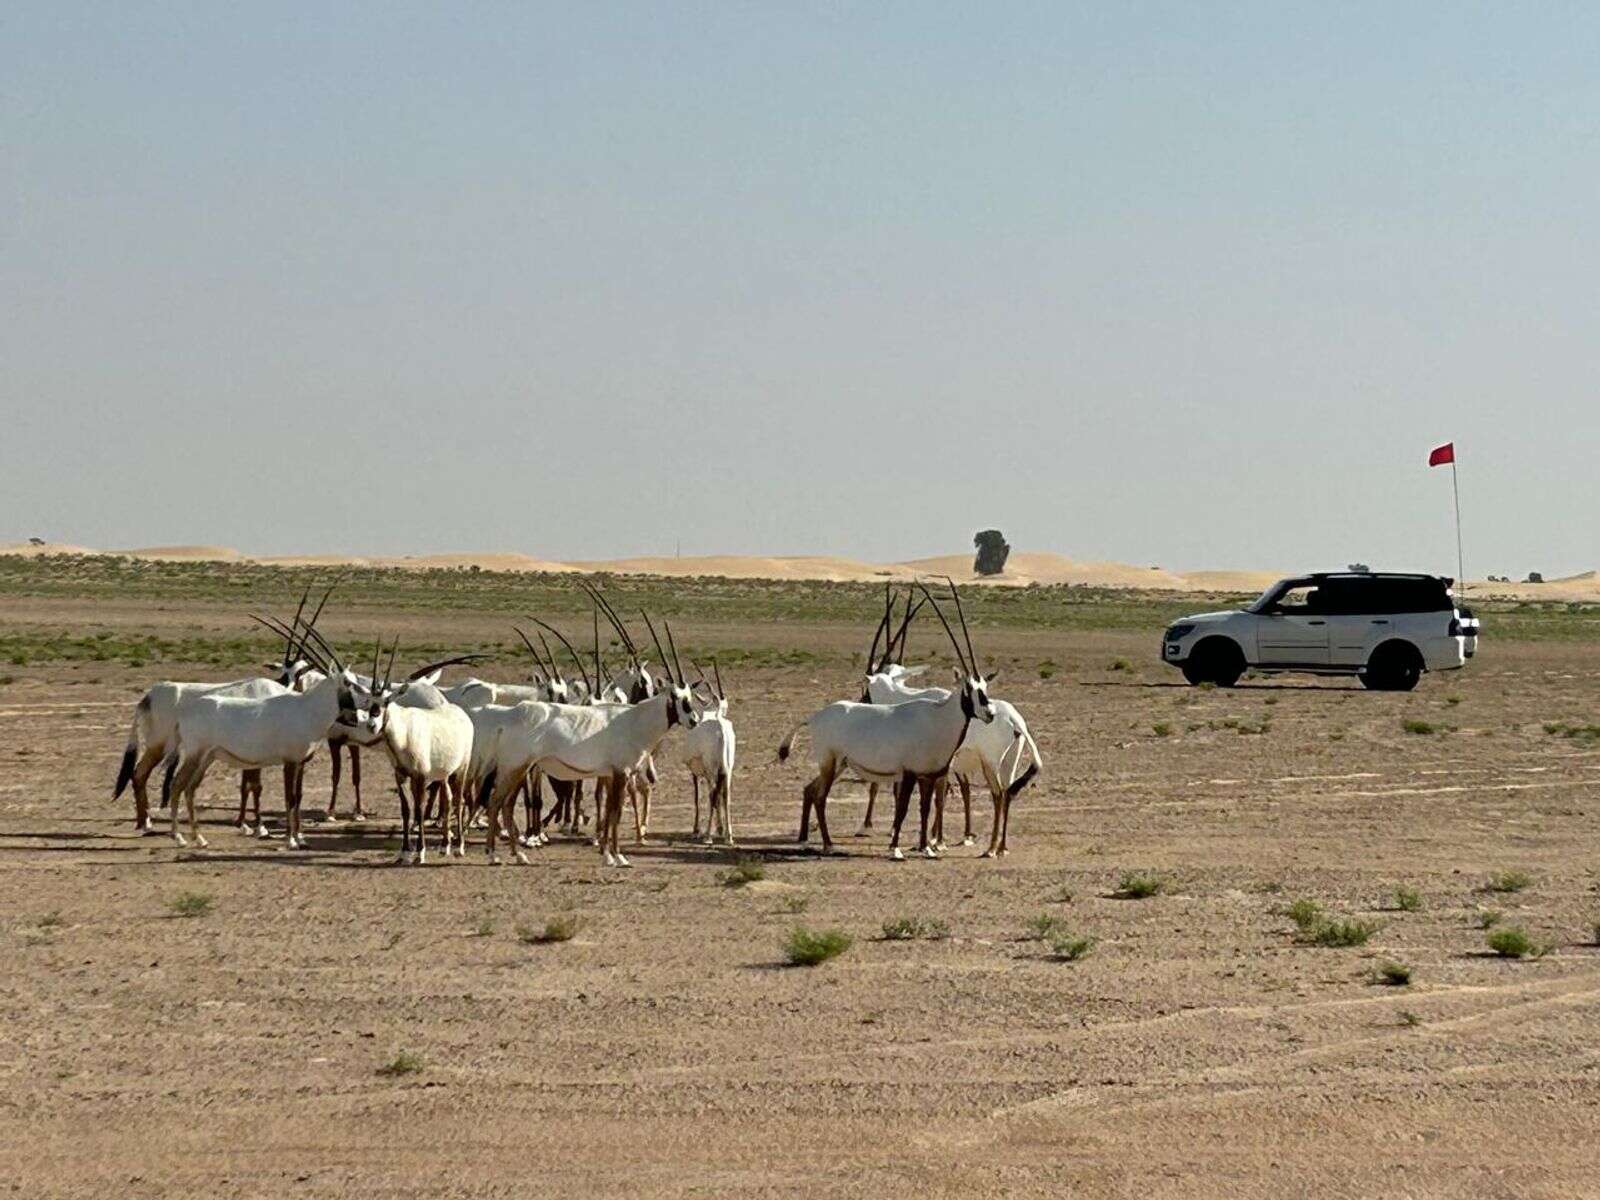 oryx, gazelles: uae residents spot animals as deserts turn green after rains